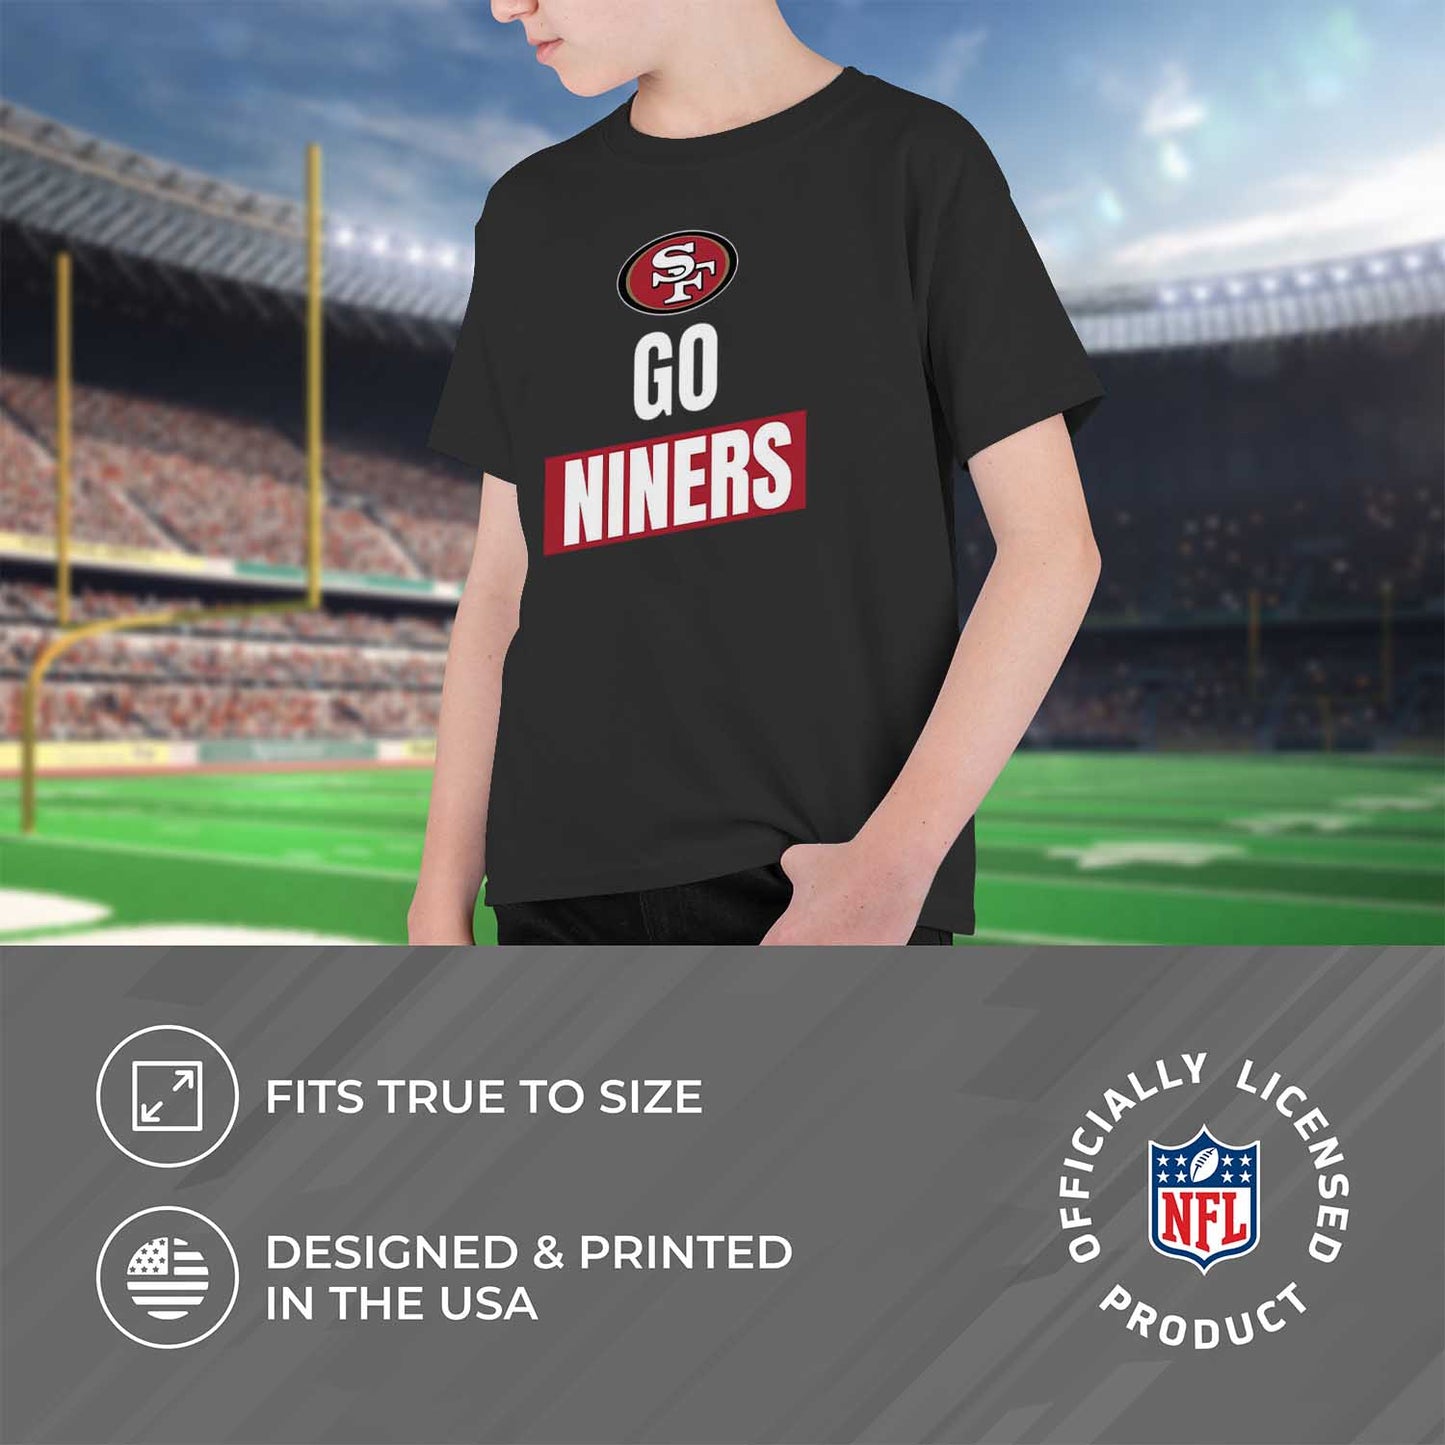 San Francisco 49ers NFL Youth Team Slogan Short Sleeve Lightweight T Shirt - Black